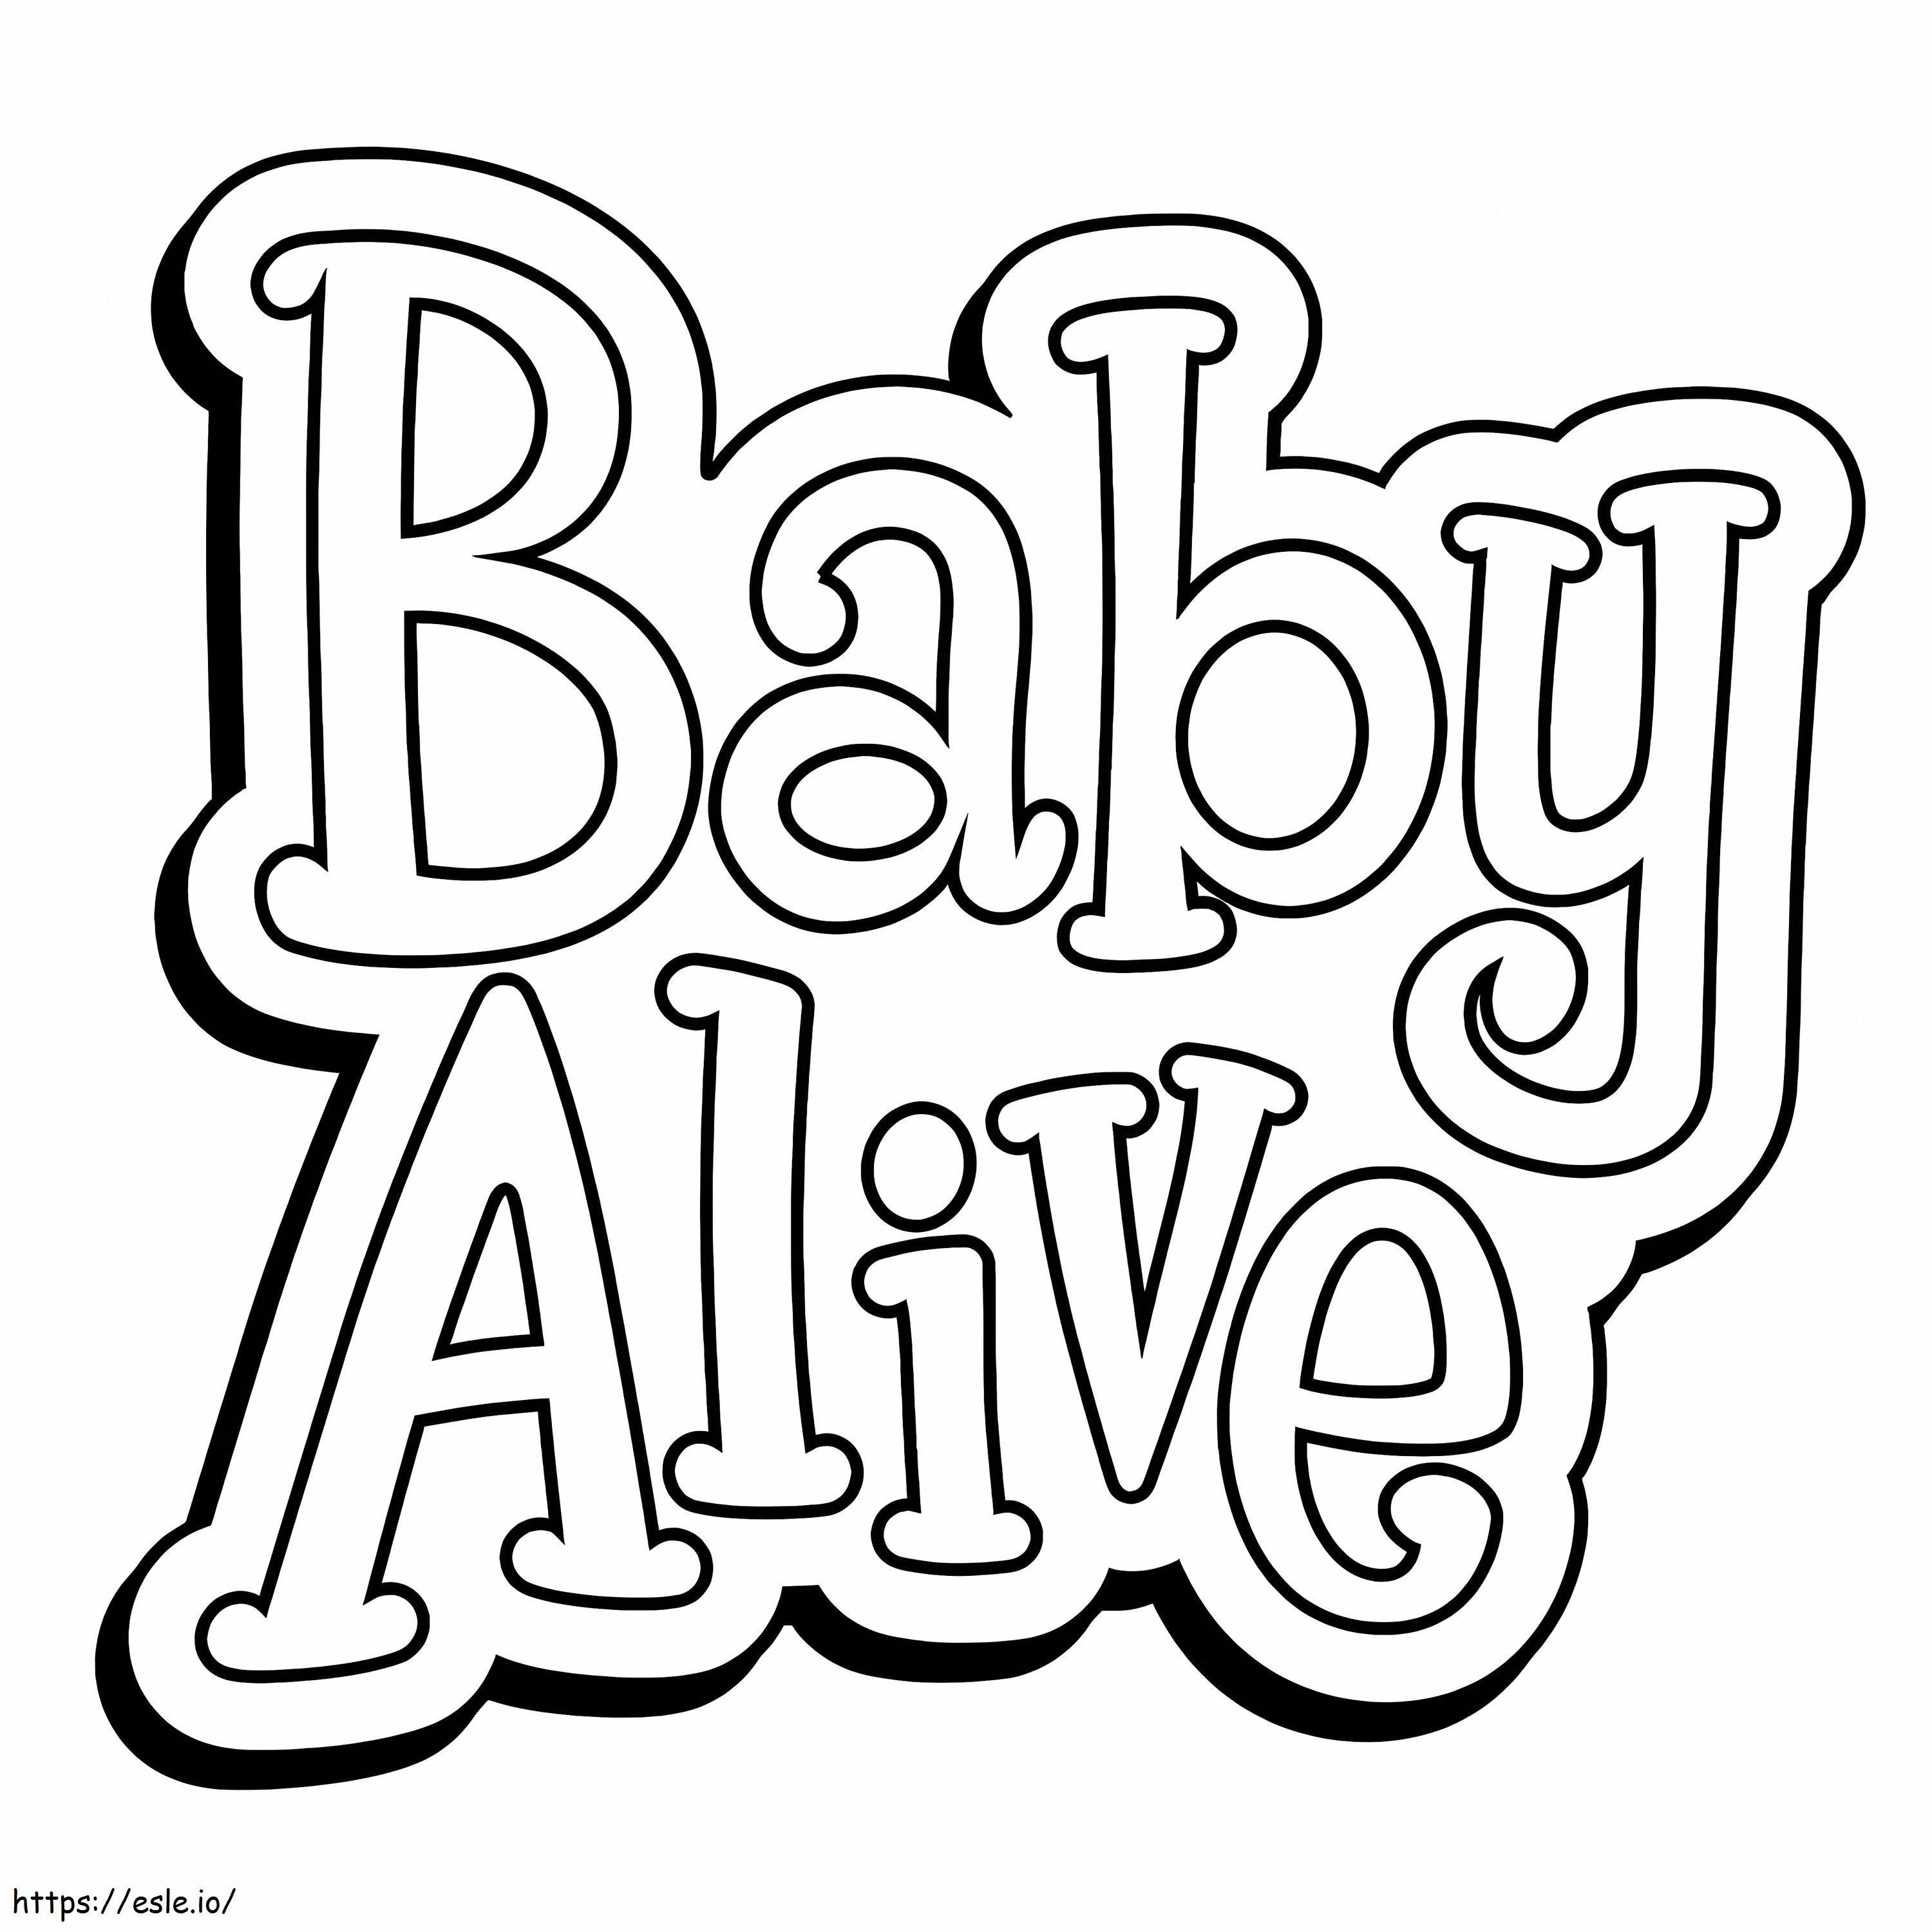 Logo Baby Alive kolorowanka